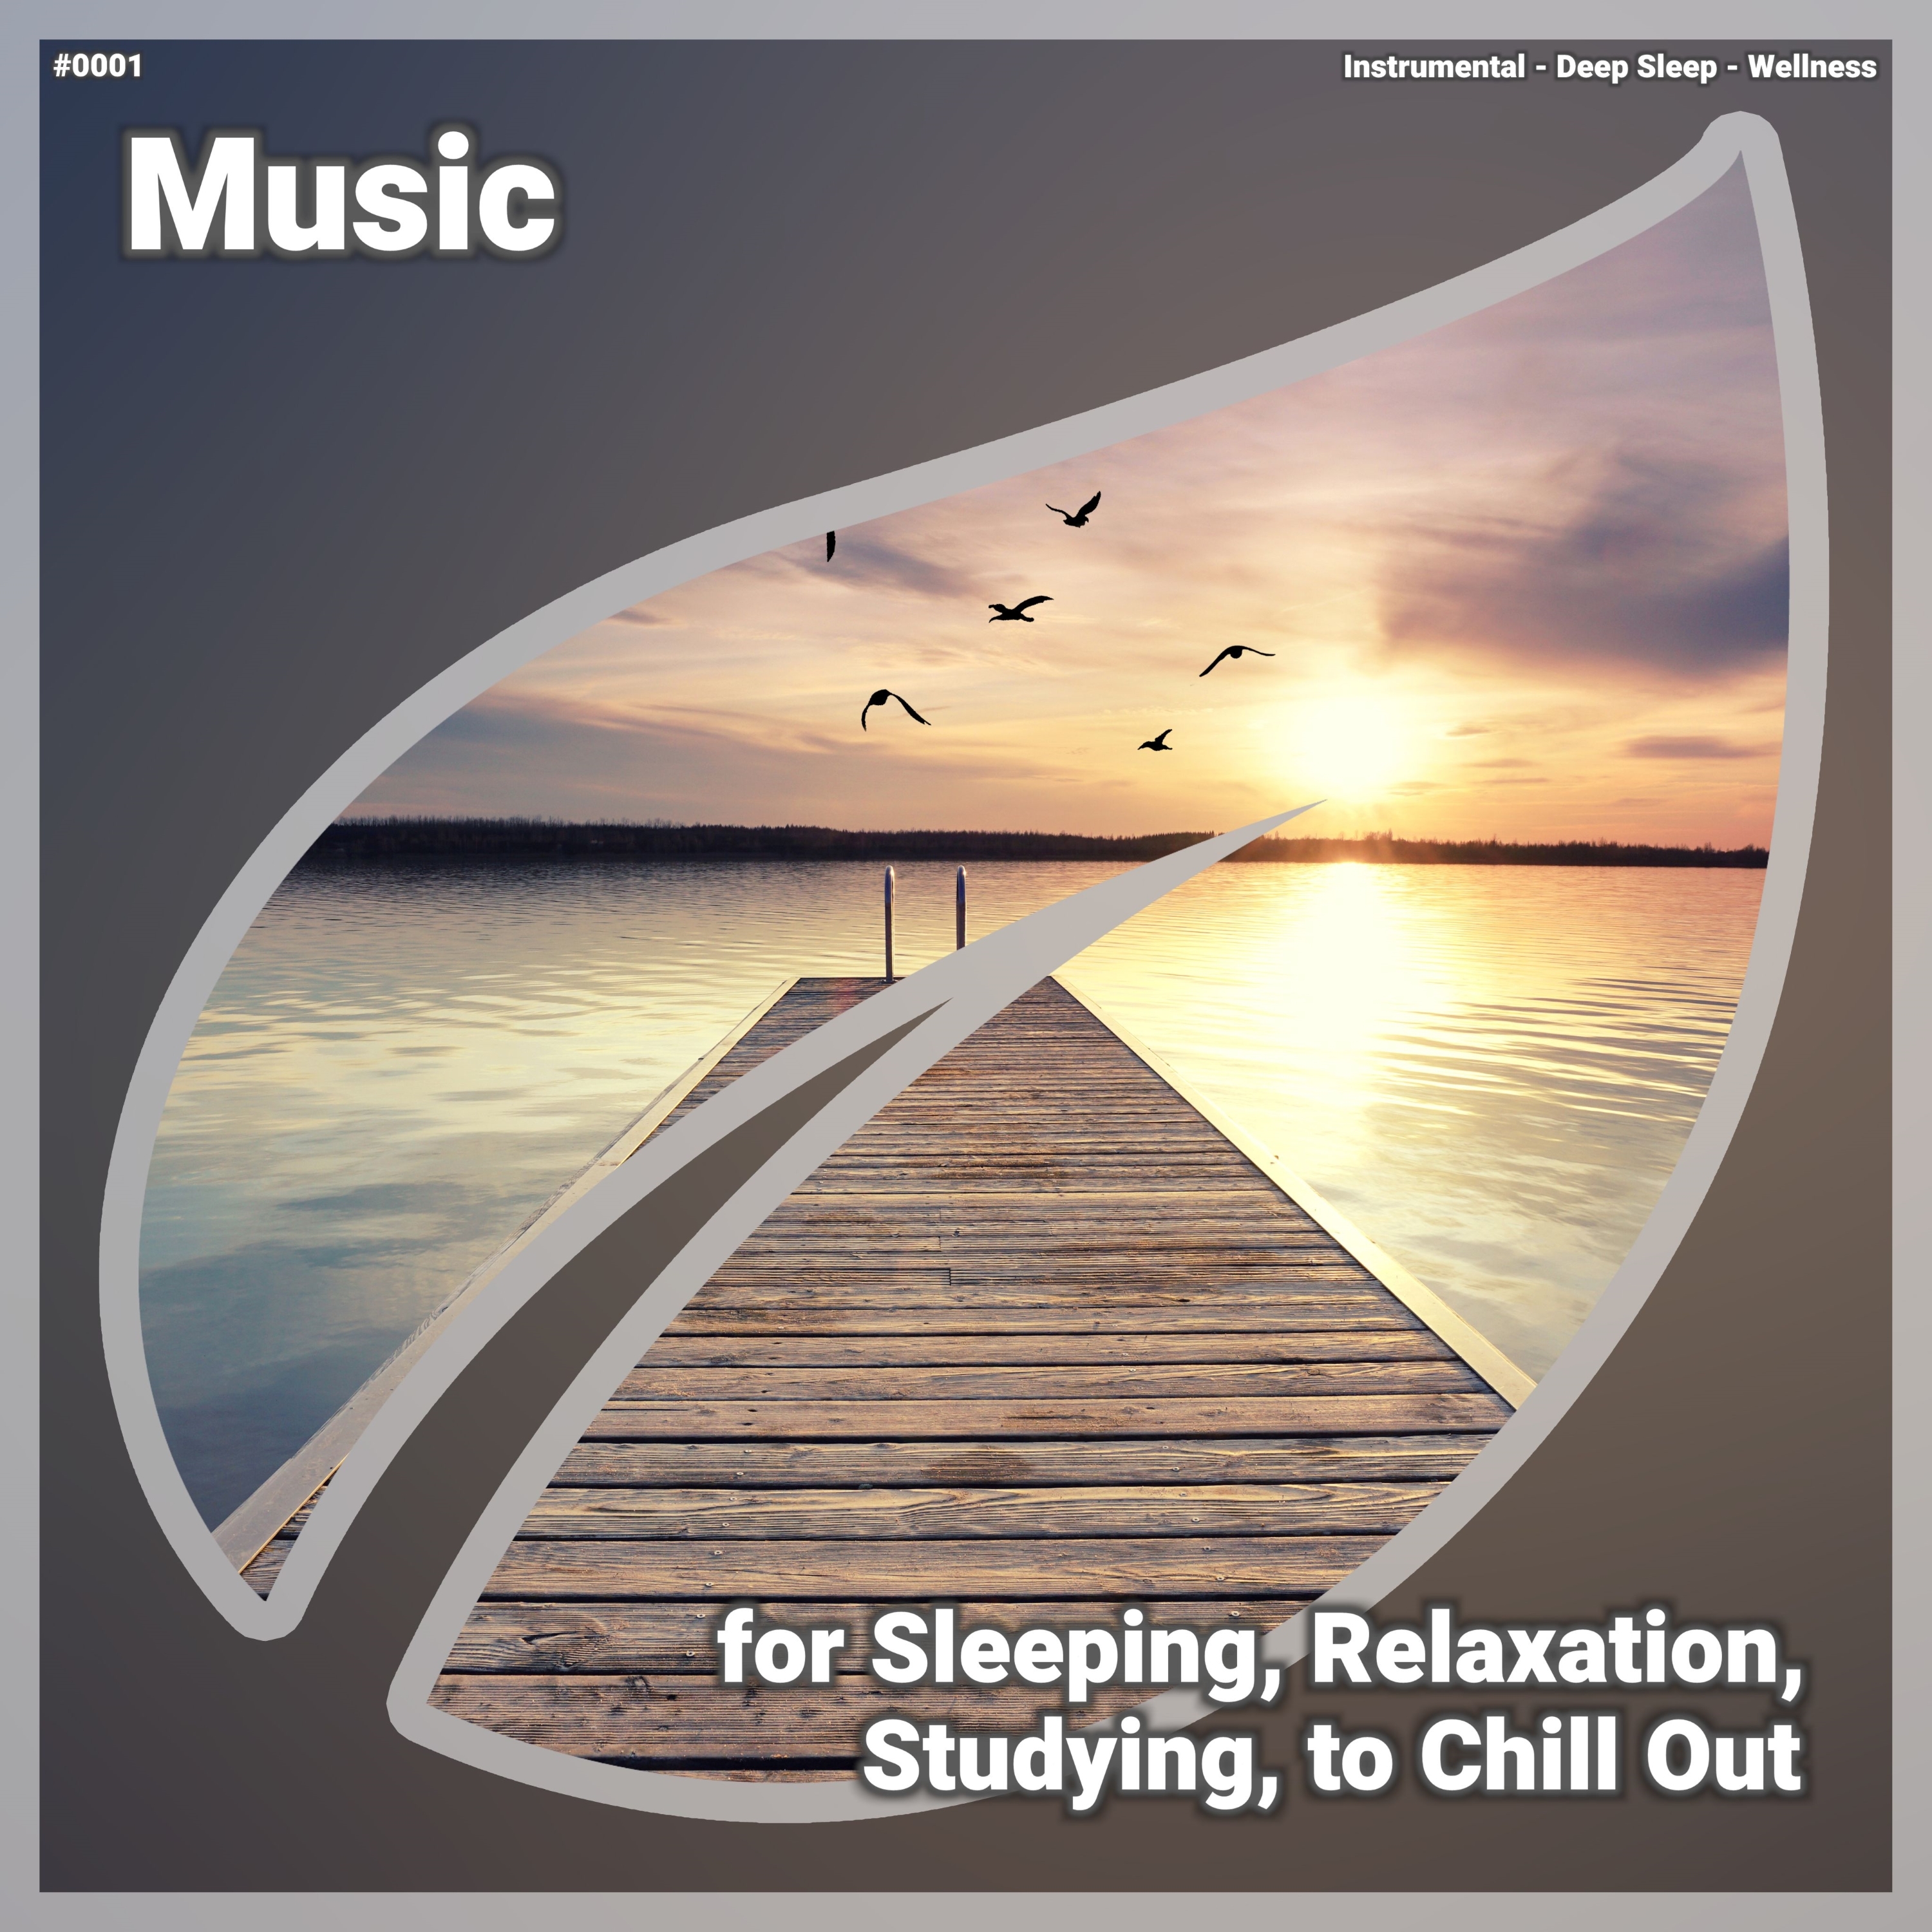 डाउनलोड करा Relaxing Music, Pt. 4